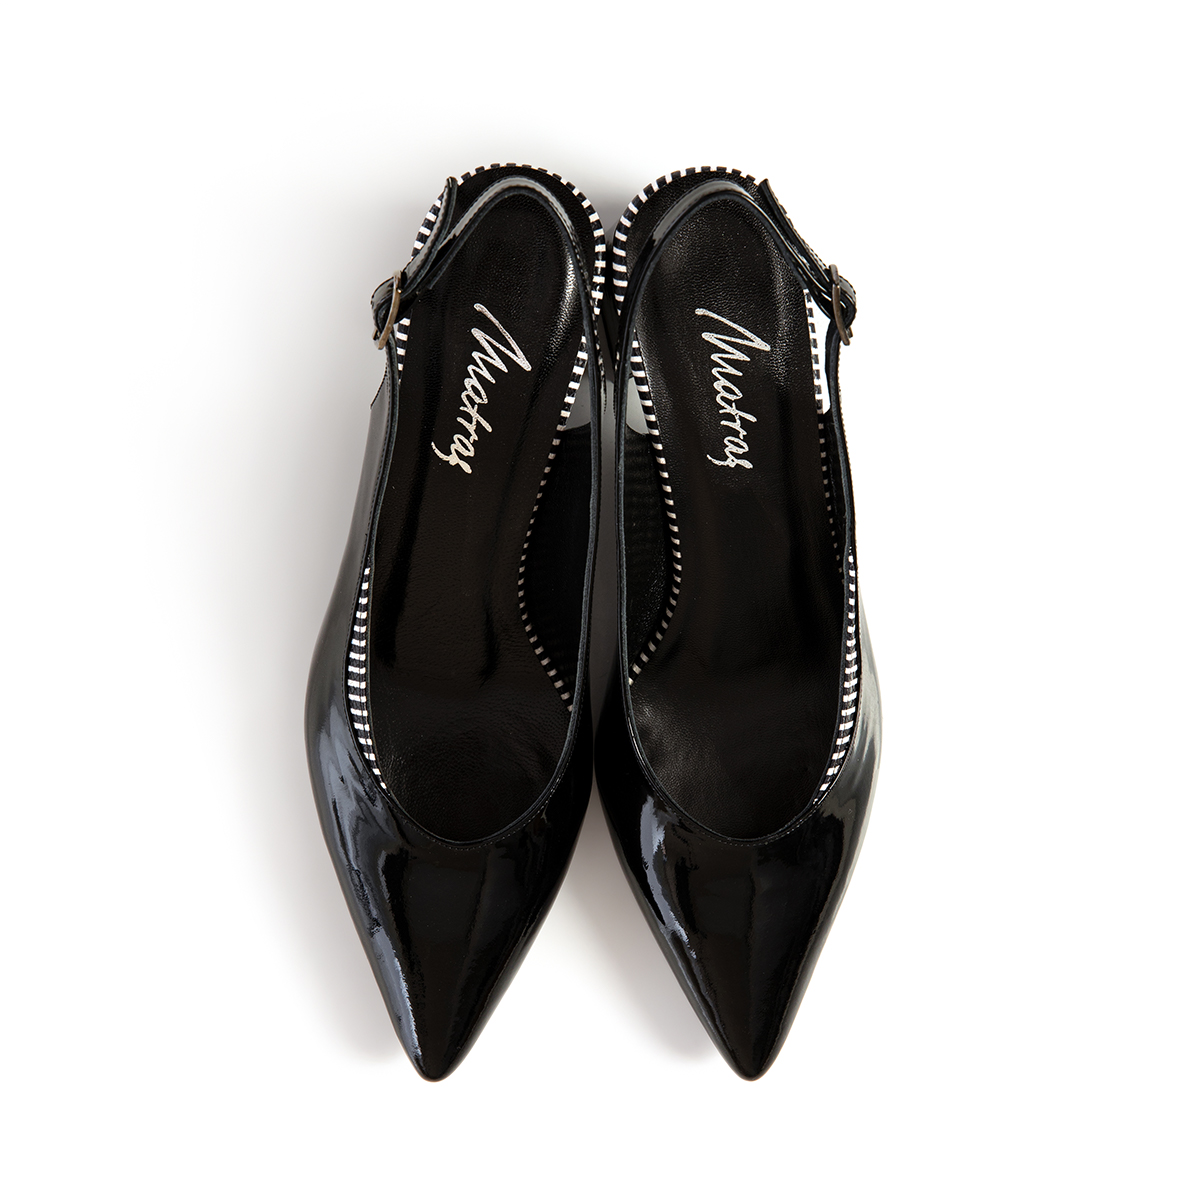 Matraş Kadın Rugan Deri Topuklu Ayakkabı  Siyah 9FF-1407